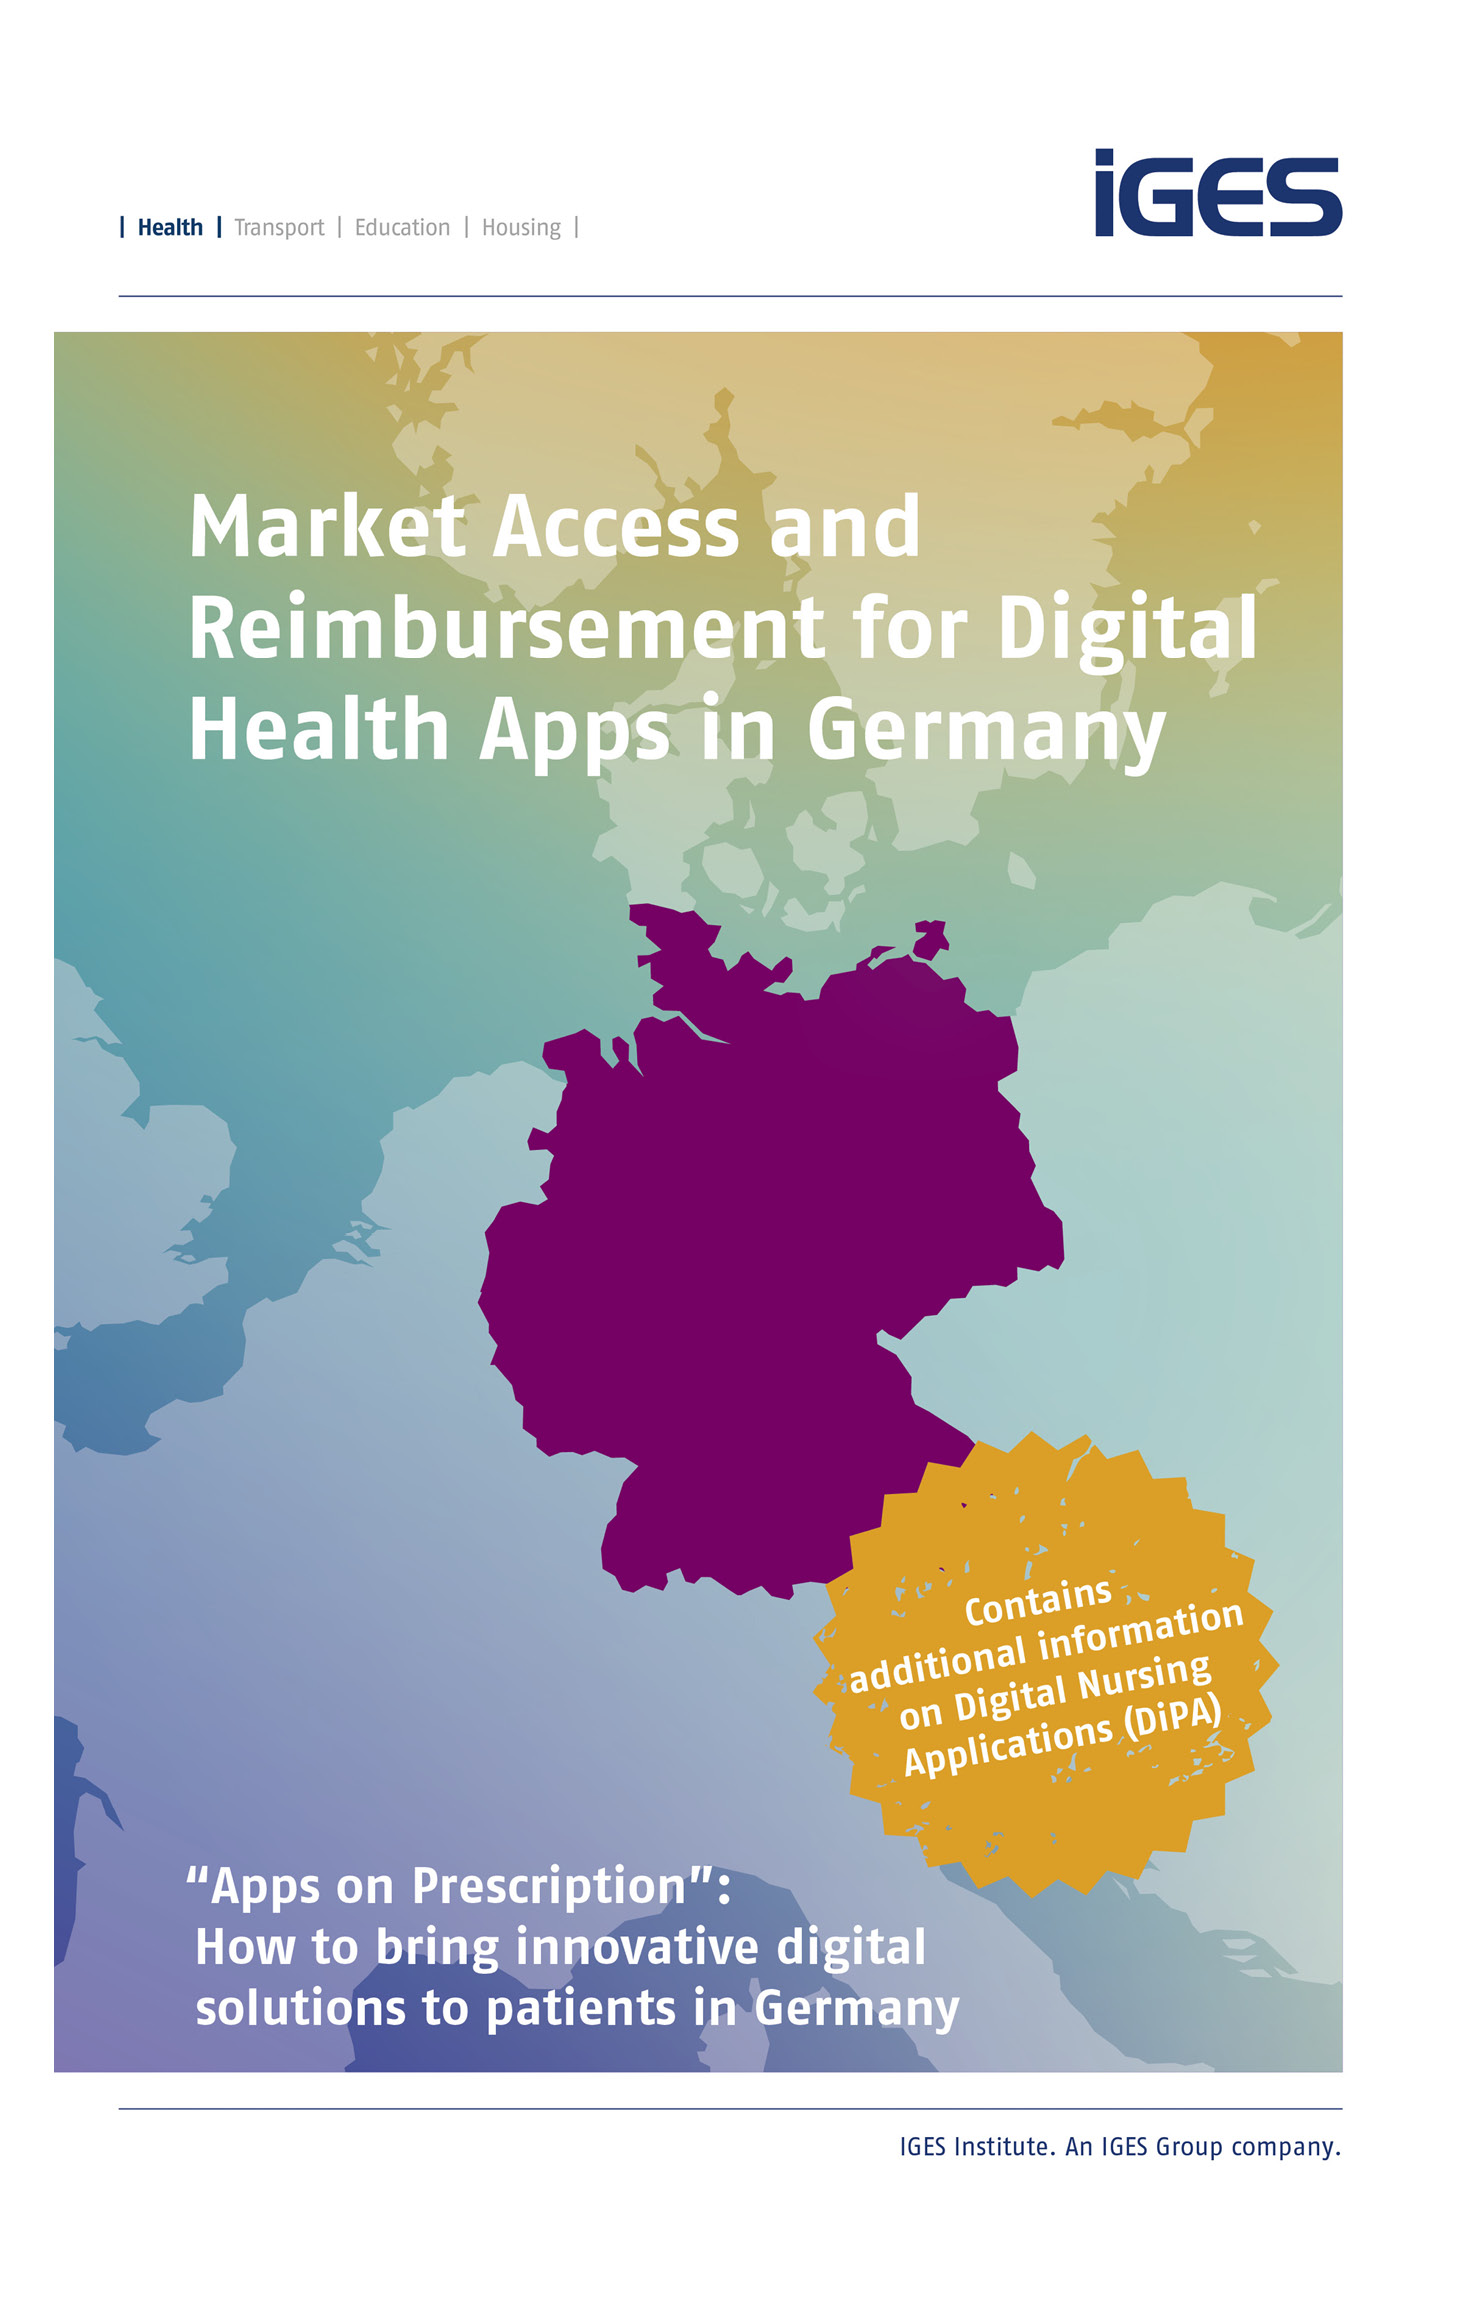 Digital Health Apps in Germany